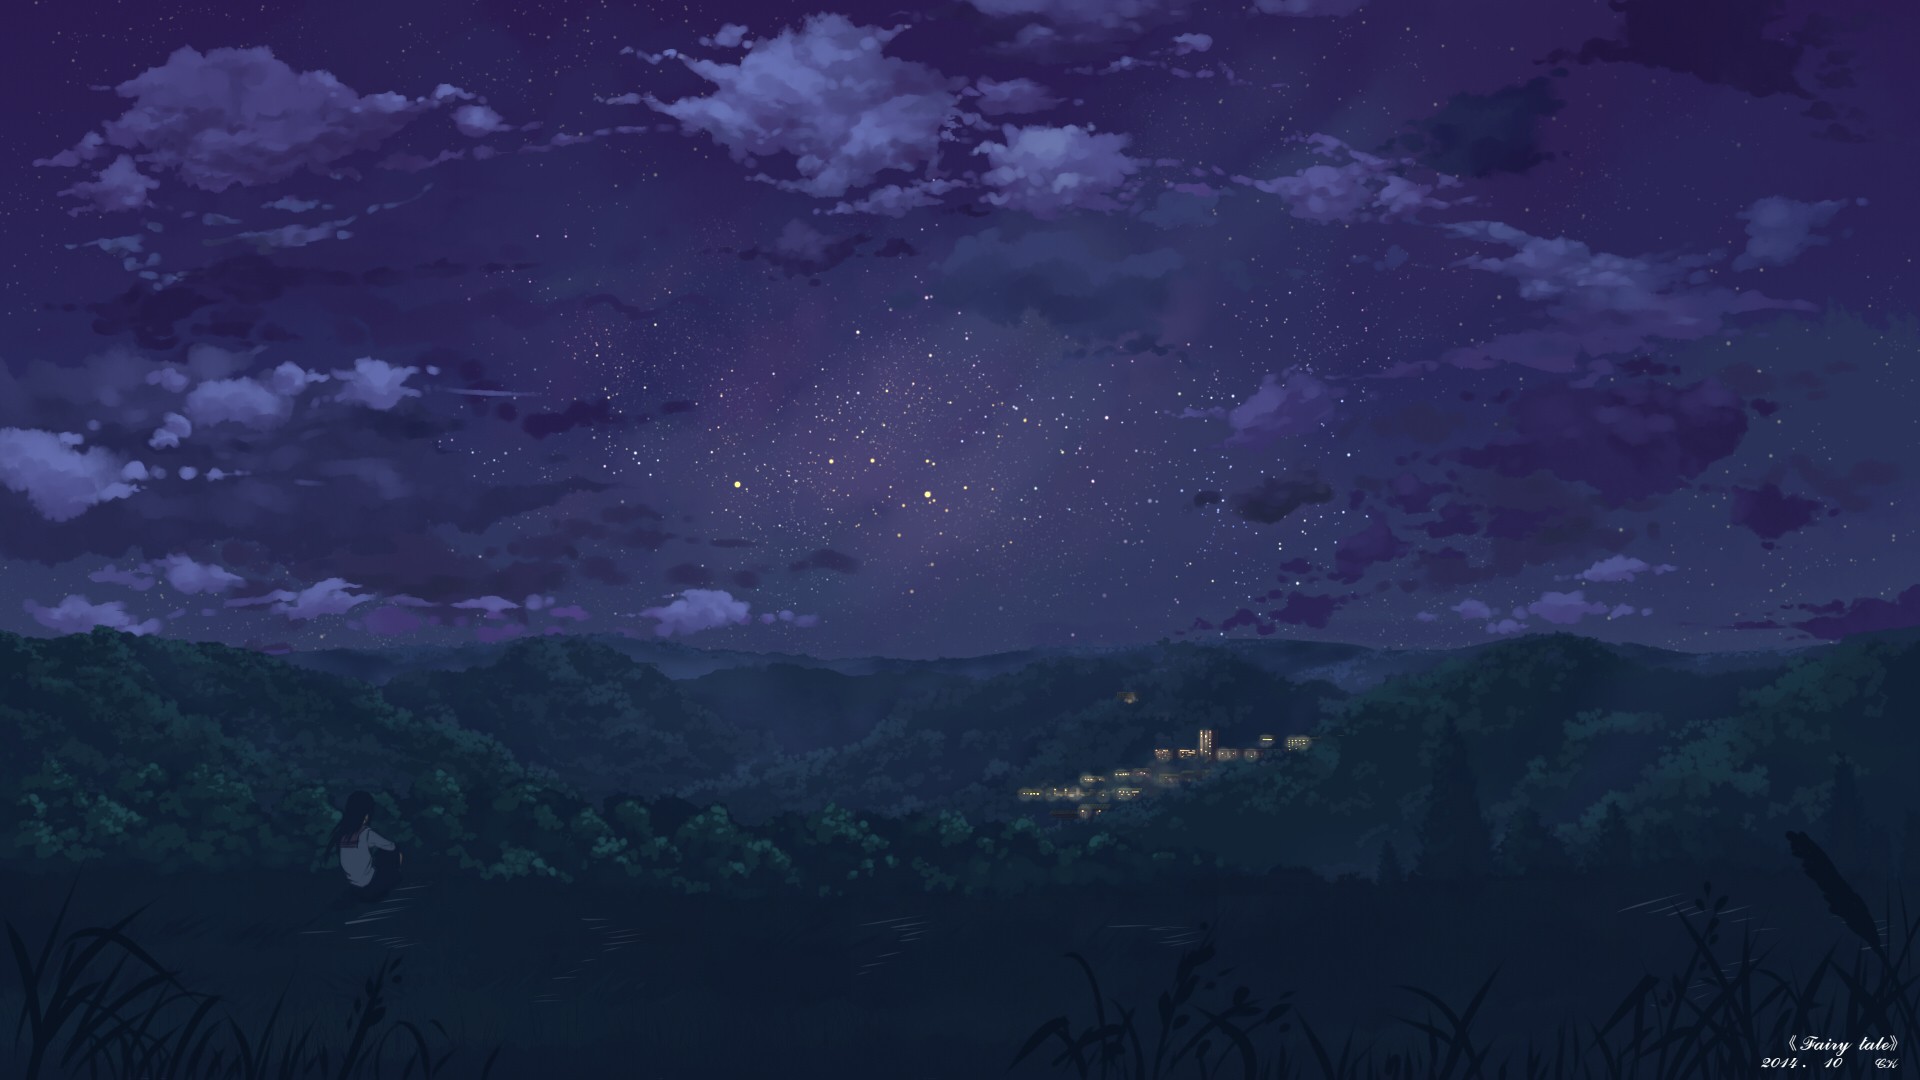 1920x1080 anime night landscape stars wallpaper JPG 209 kB